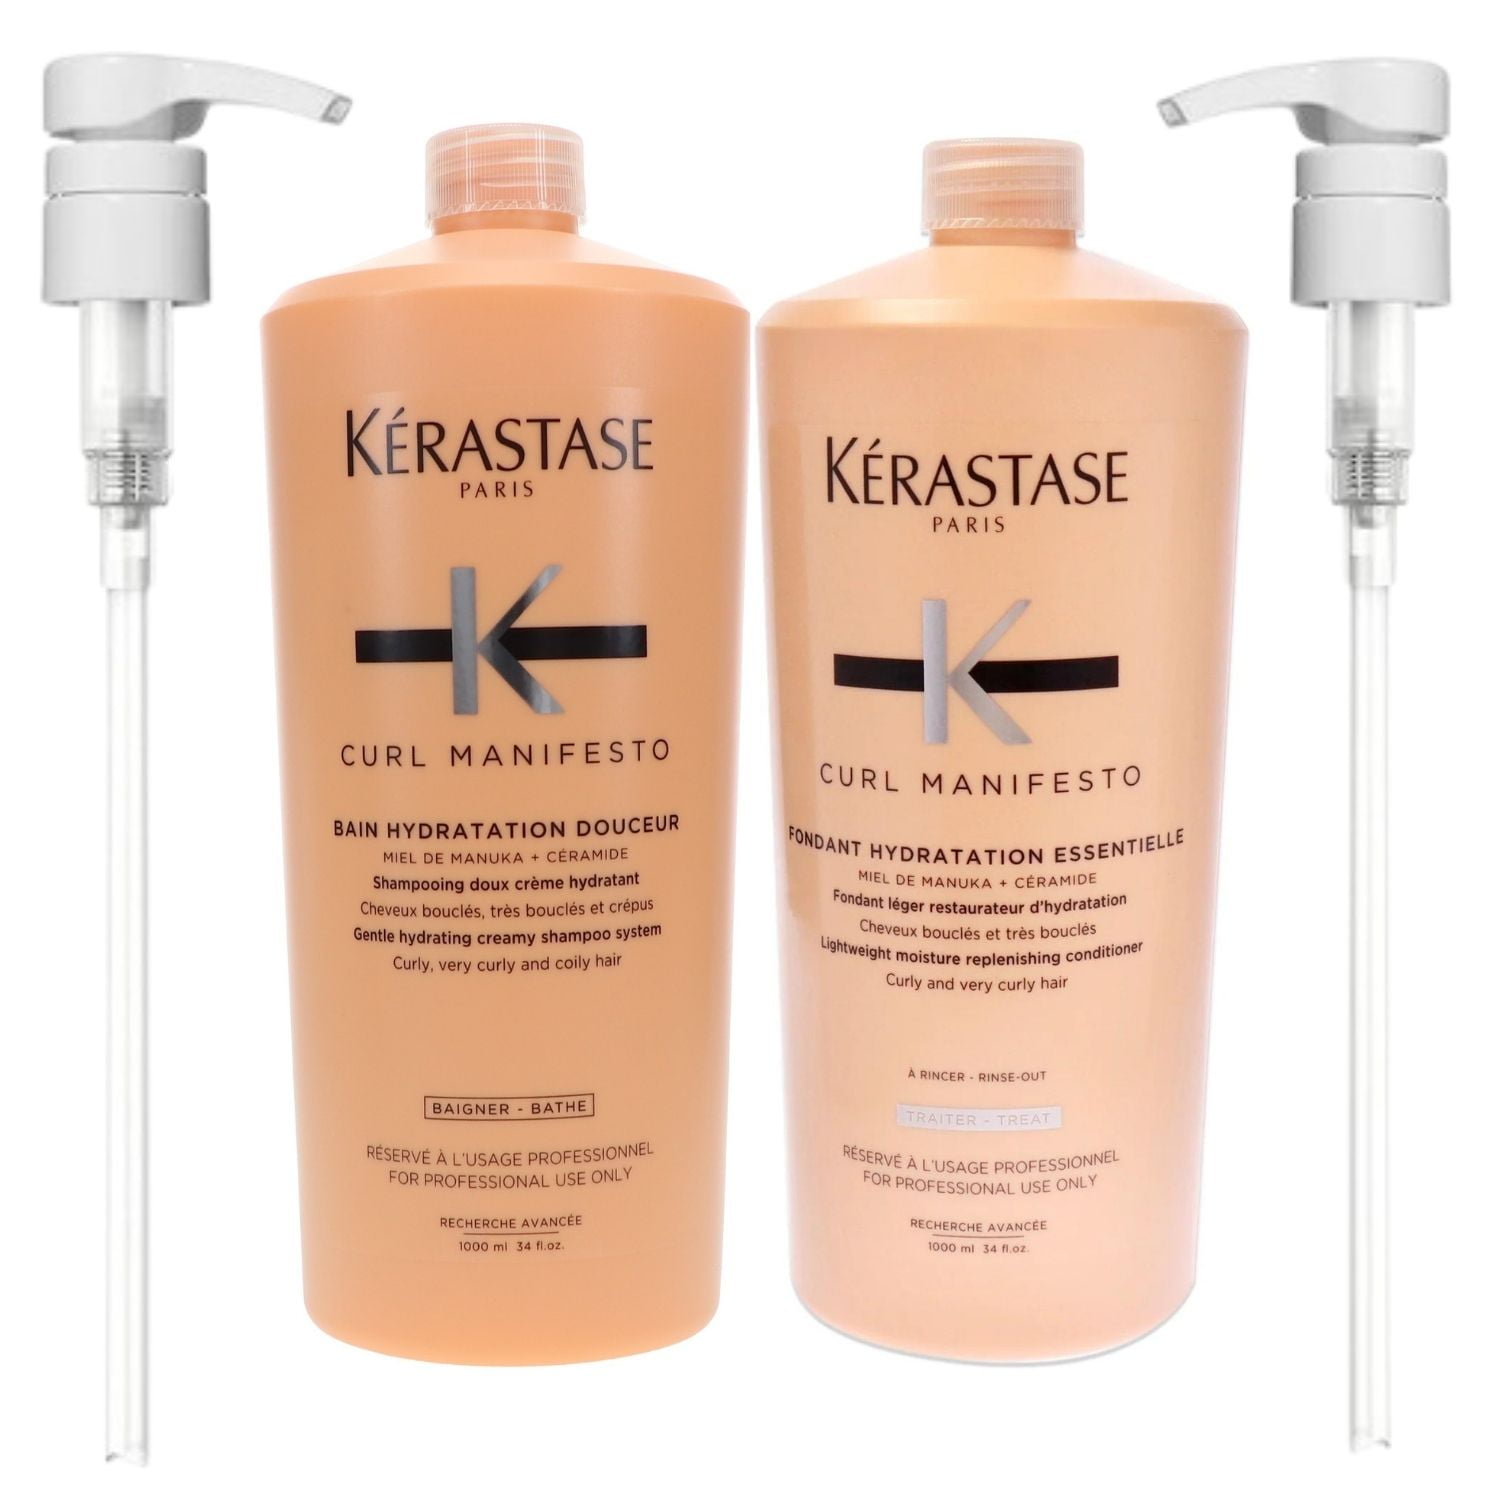 Kerastase Curl Manifesto Bain Hydratation Douceur Shampoo & Fondant  Hydratation Essentielle Conditioner Set, 34 oz Each With Pumps